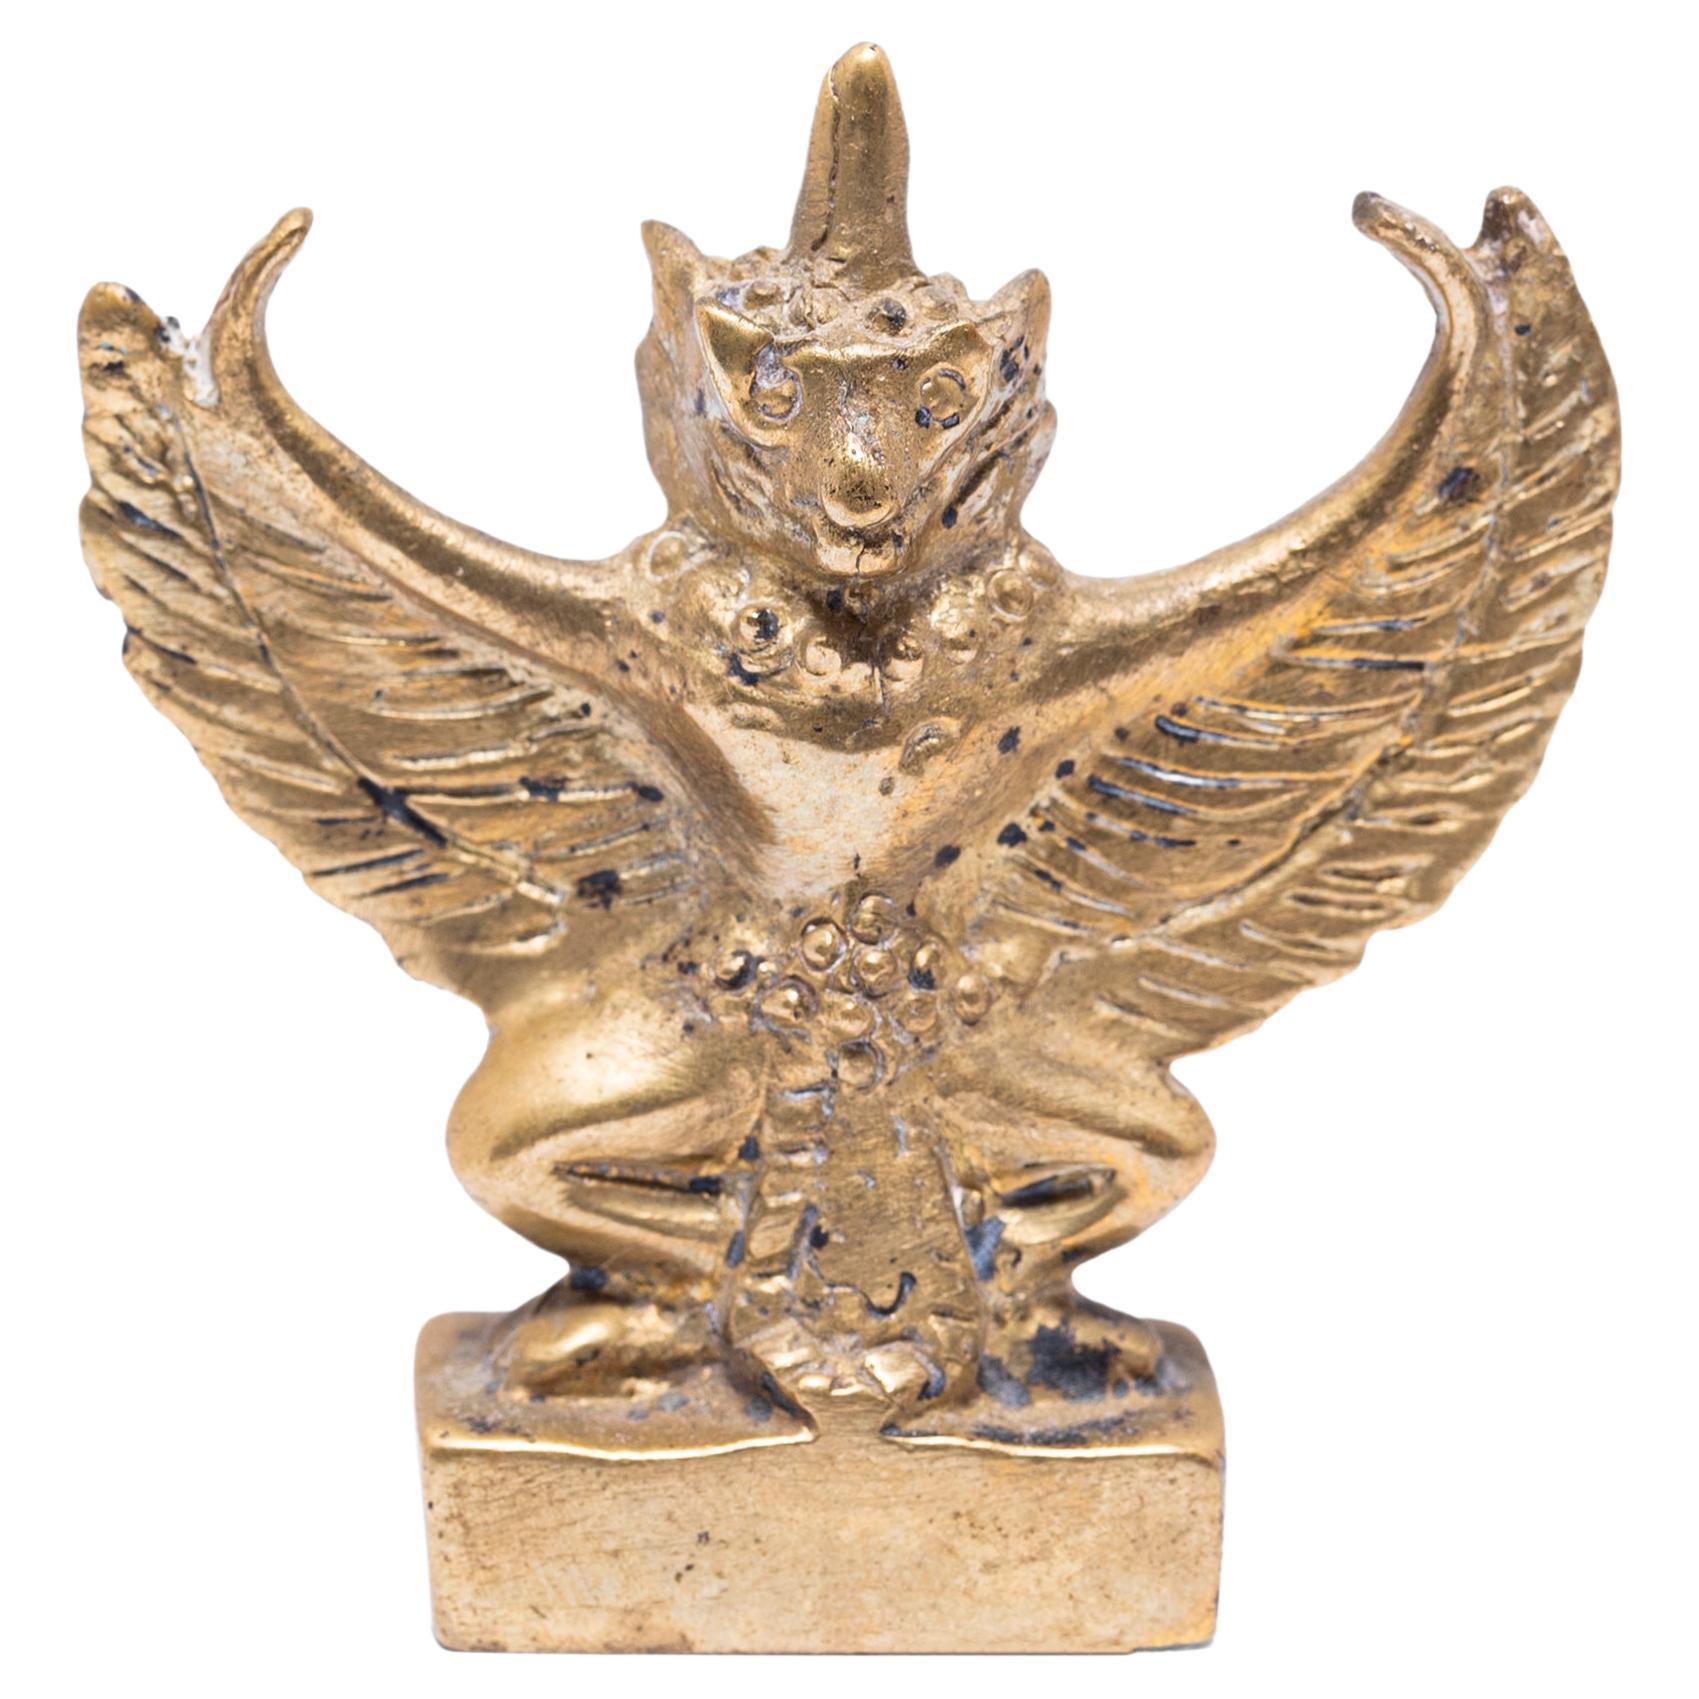 Figurine de Garuda en bronze, c. 1900